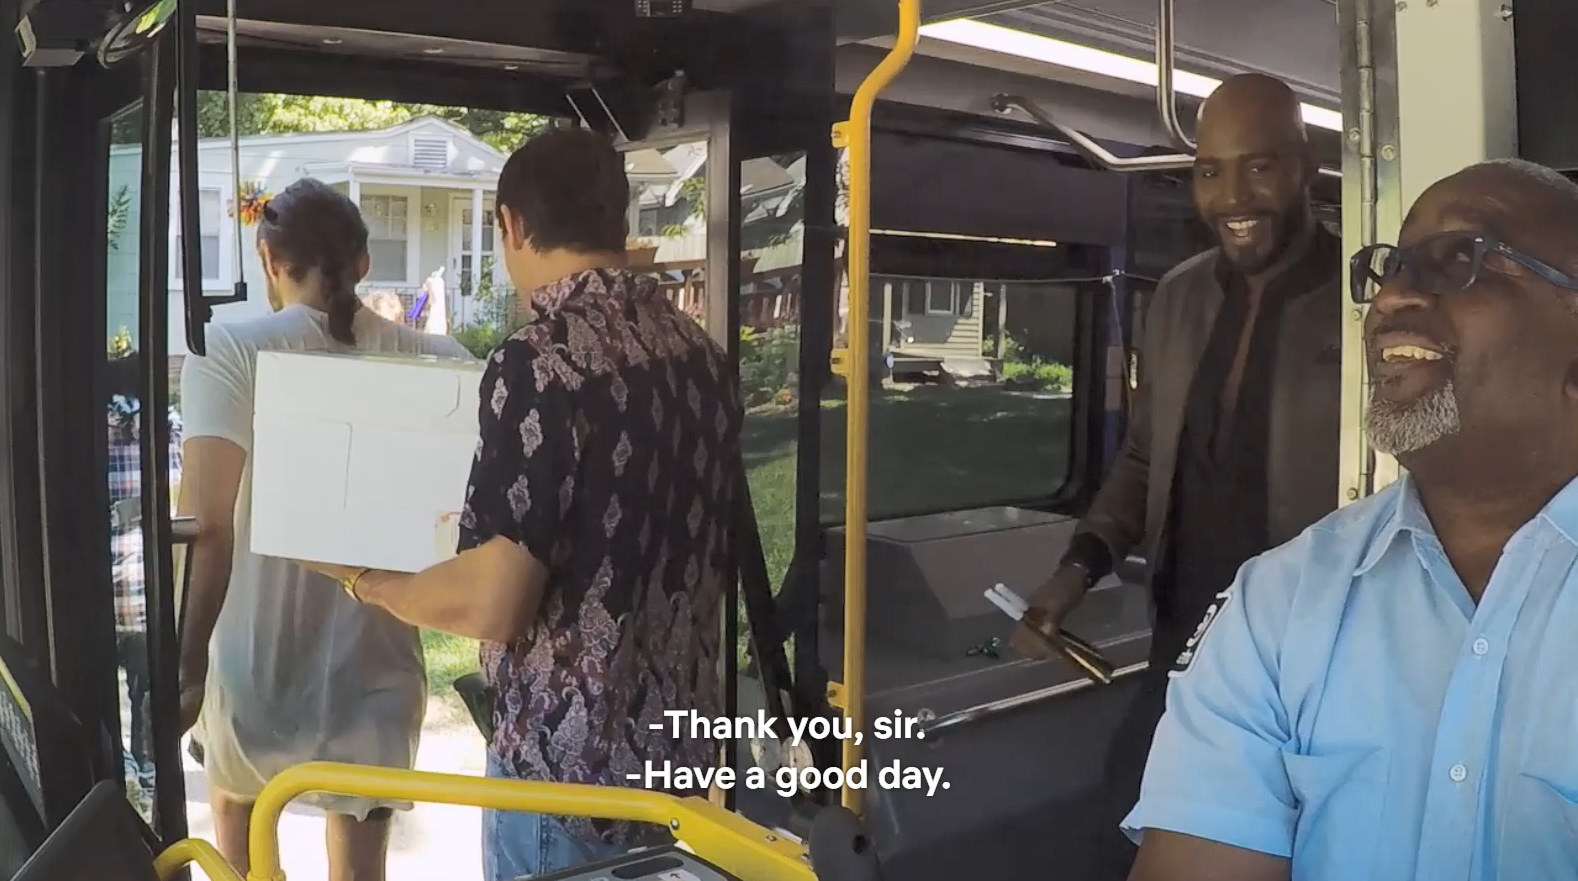 Queer Eye star Karamo thanks bus driver Fred Ersery as Karamo exits the RideKC bus. 